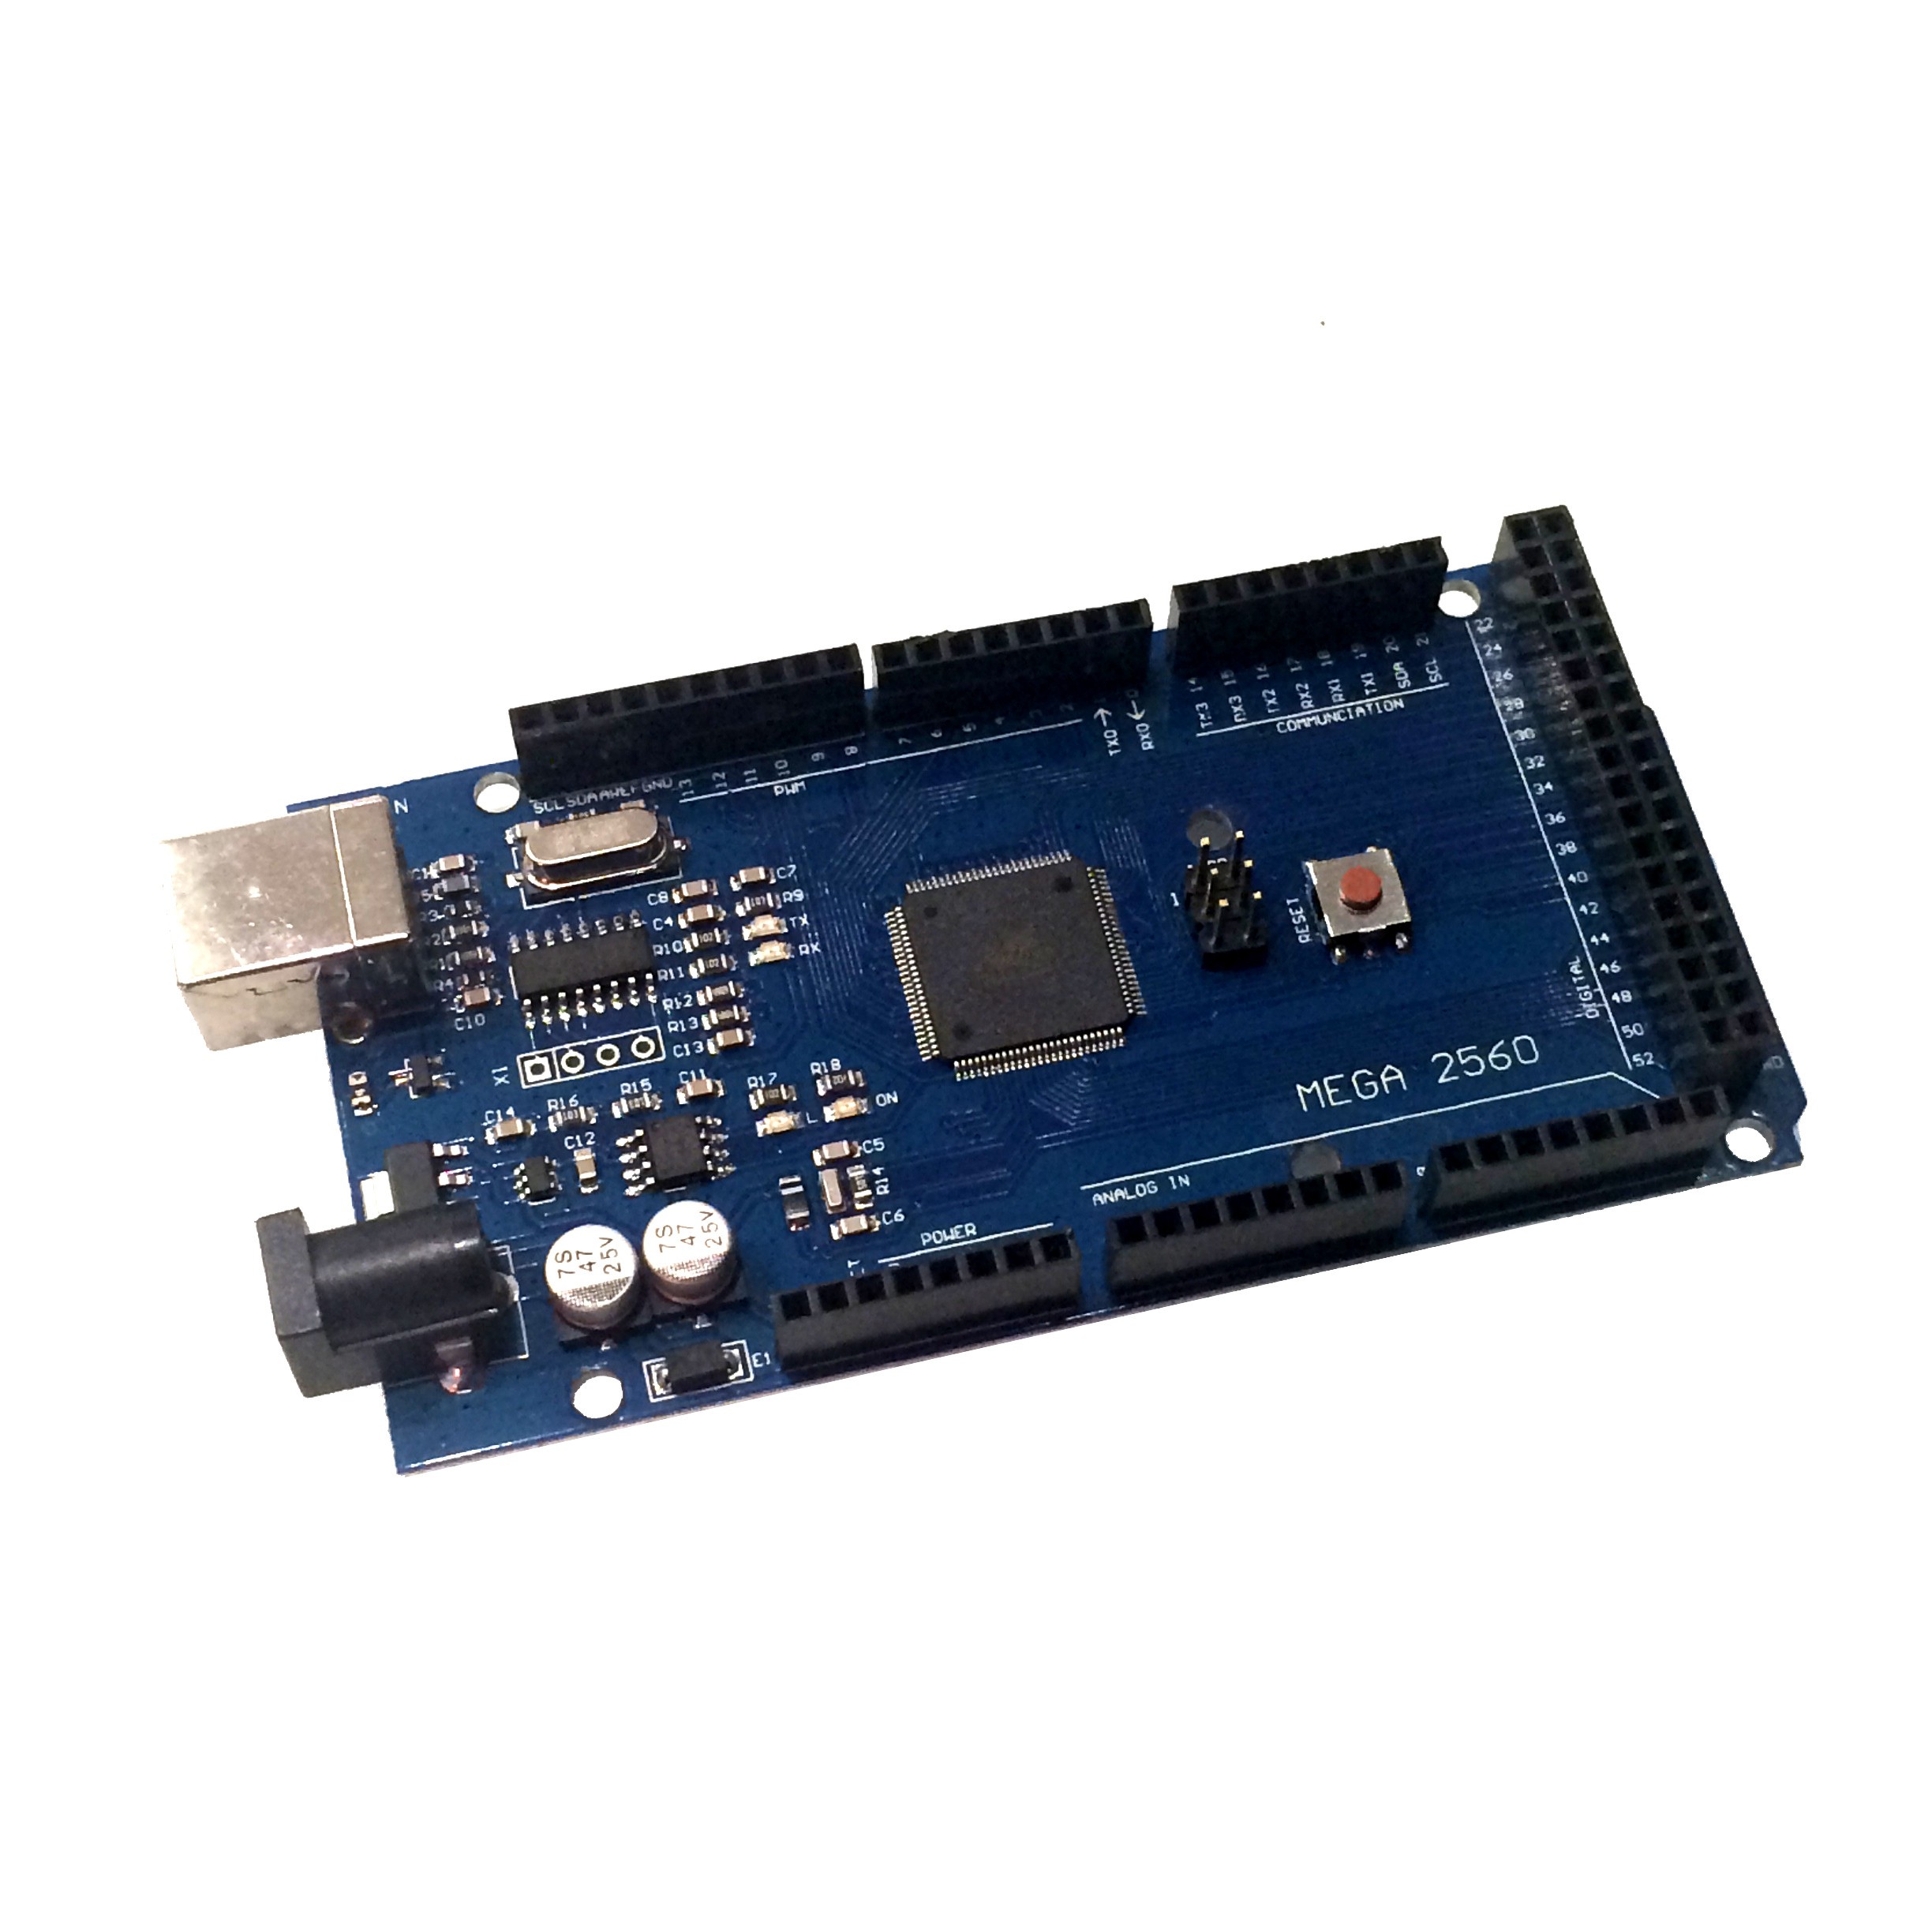 ATmega2560-16AU REV3 MEGA 2560 R3 Board mit USB Cable Compatible to Arduino New 